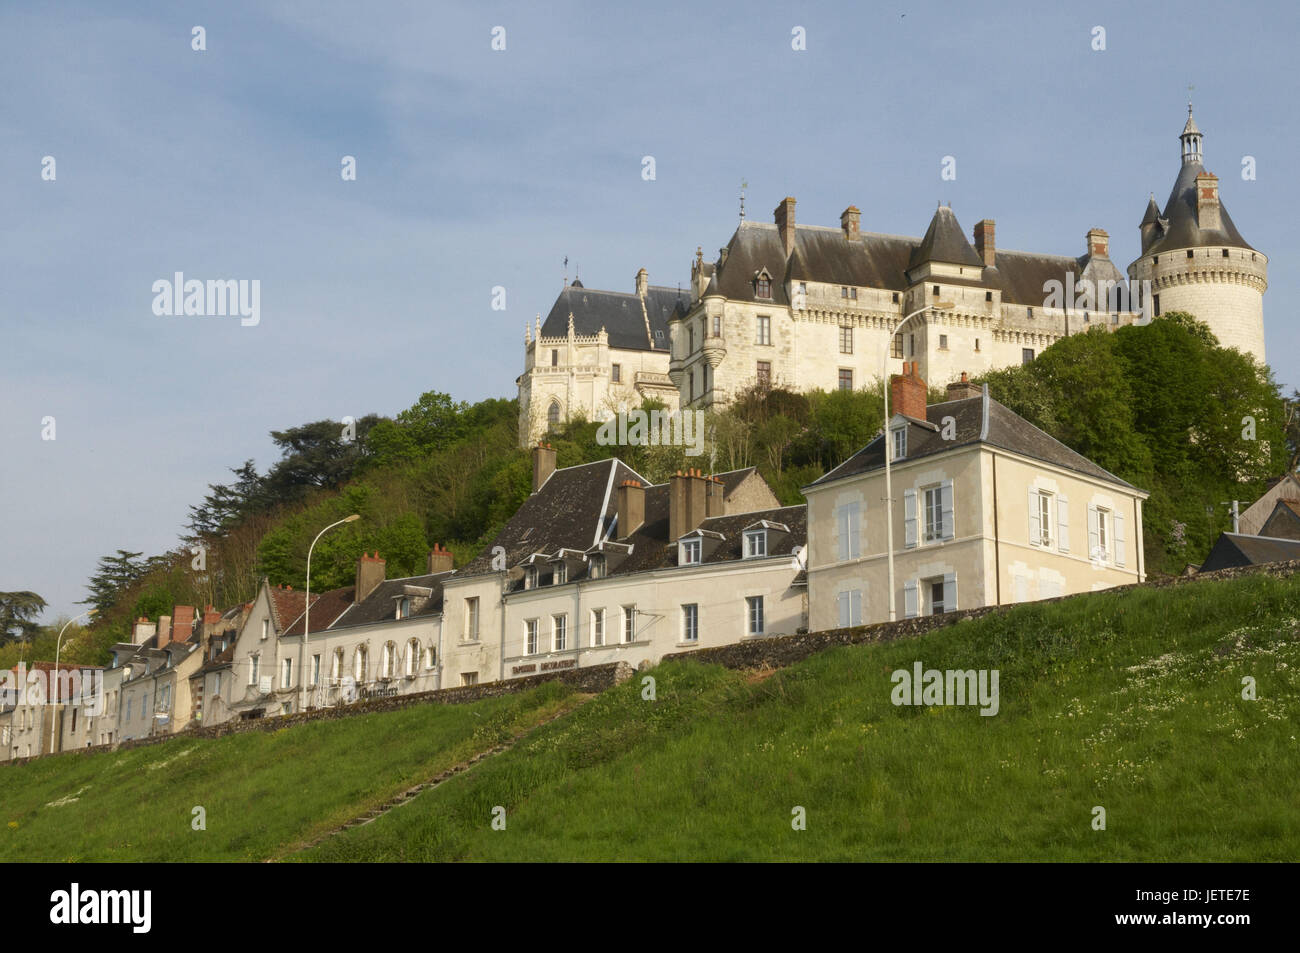 Francia, Chaumont-sur-Loire con el castillo de Chaumont, Foto de stock